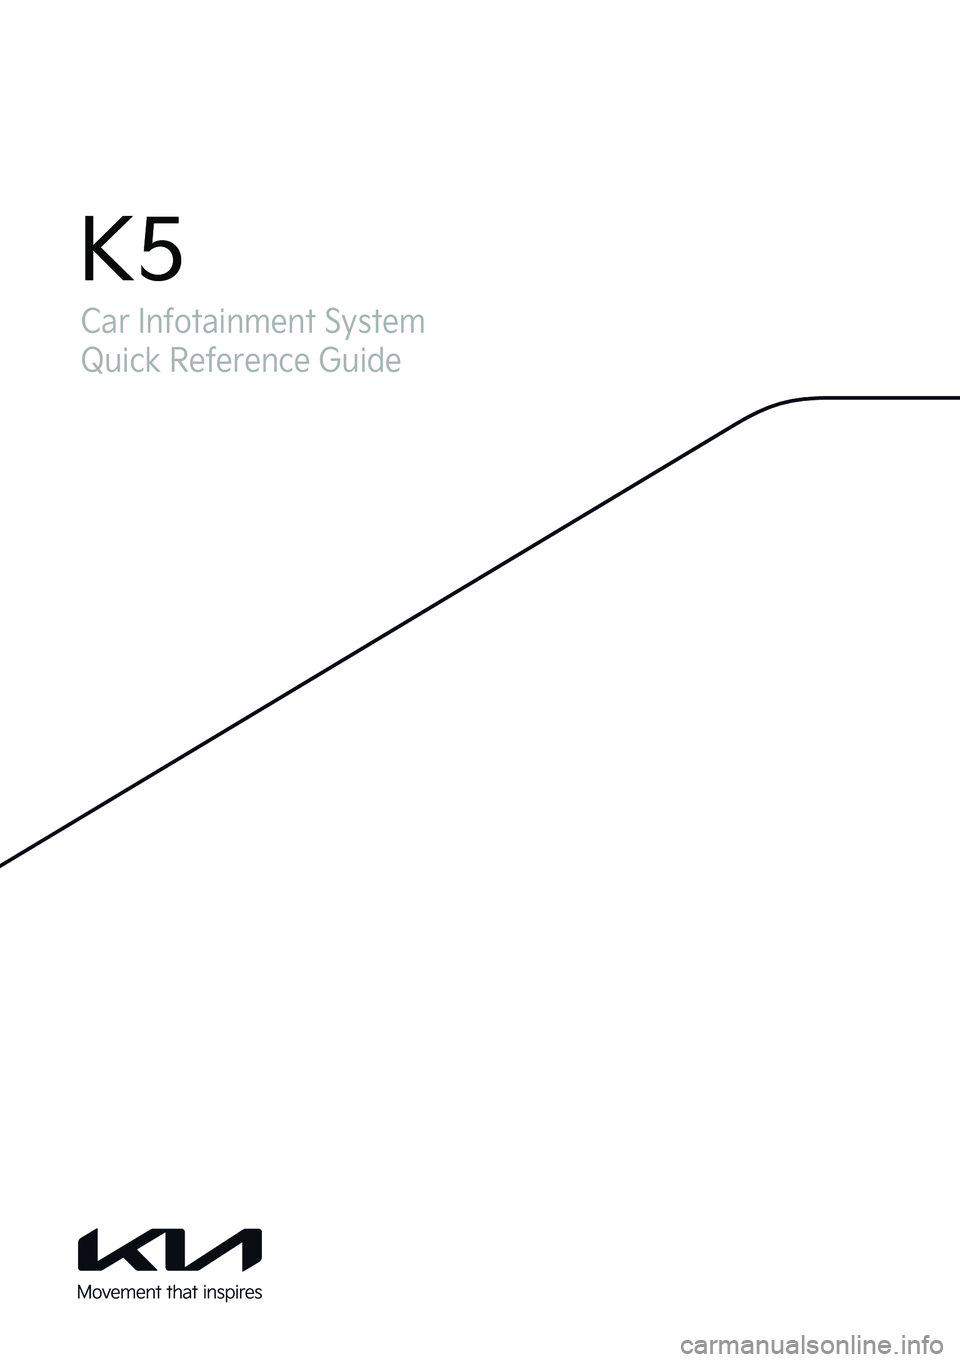 KIA FORTE 2022  Navigation System Quick Reference Guide Car Infotainment System
Quick Reference Guide
K5  